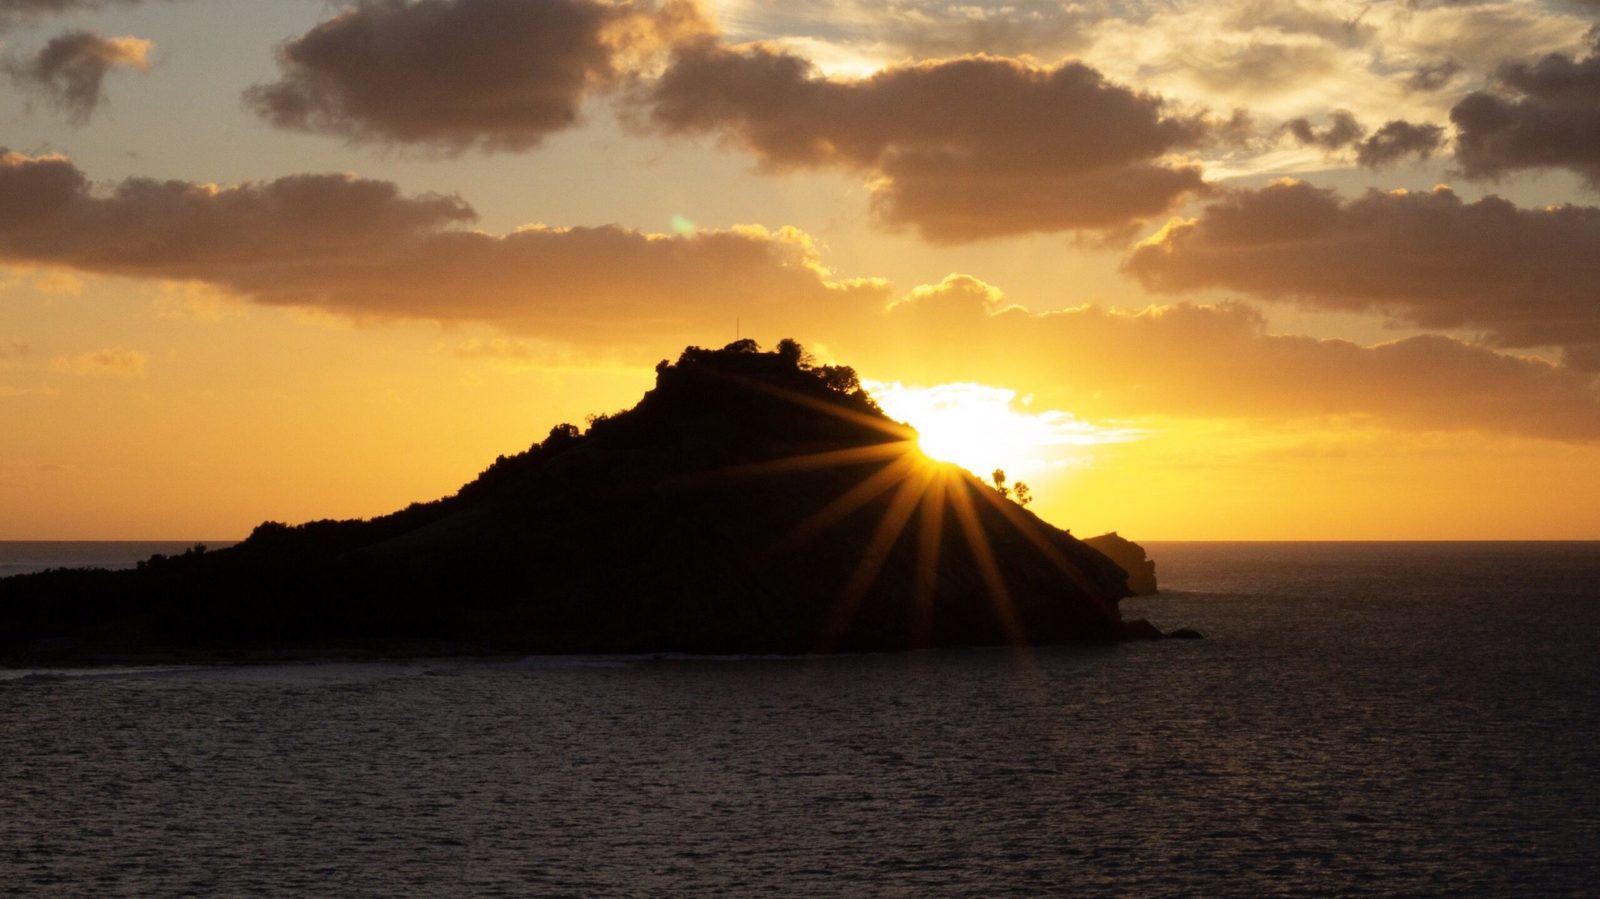 View of Antigua sunset from a sailboat (Photo: @actorbett via Twenty20)